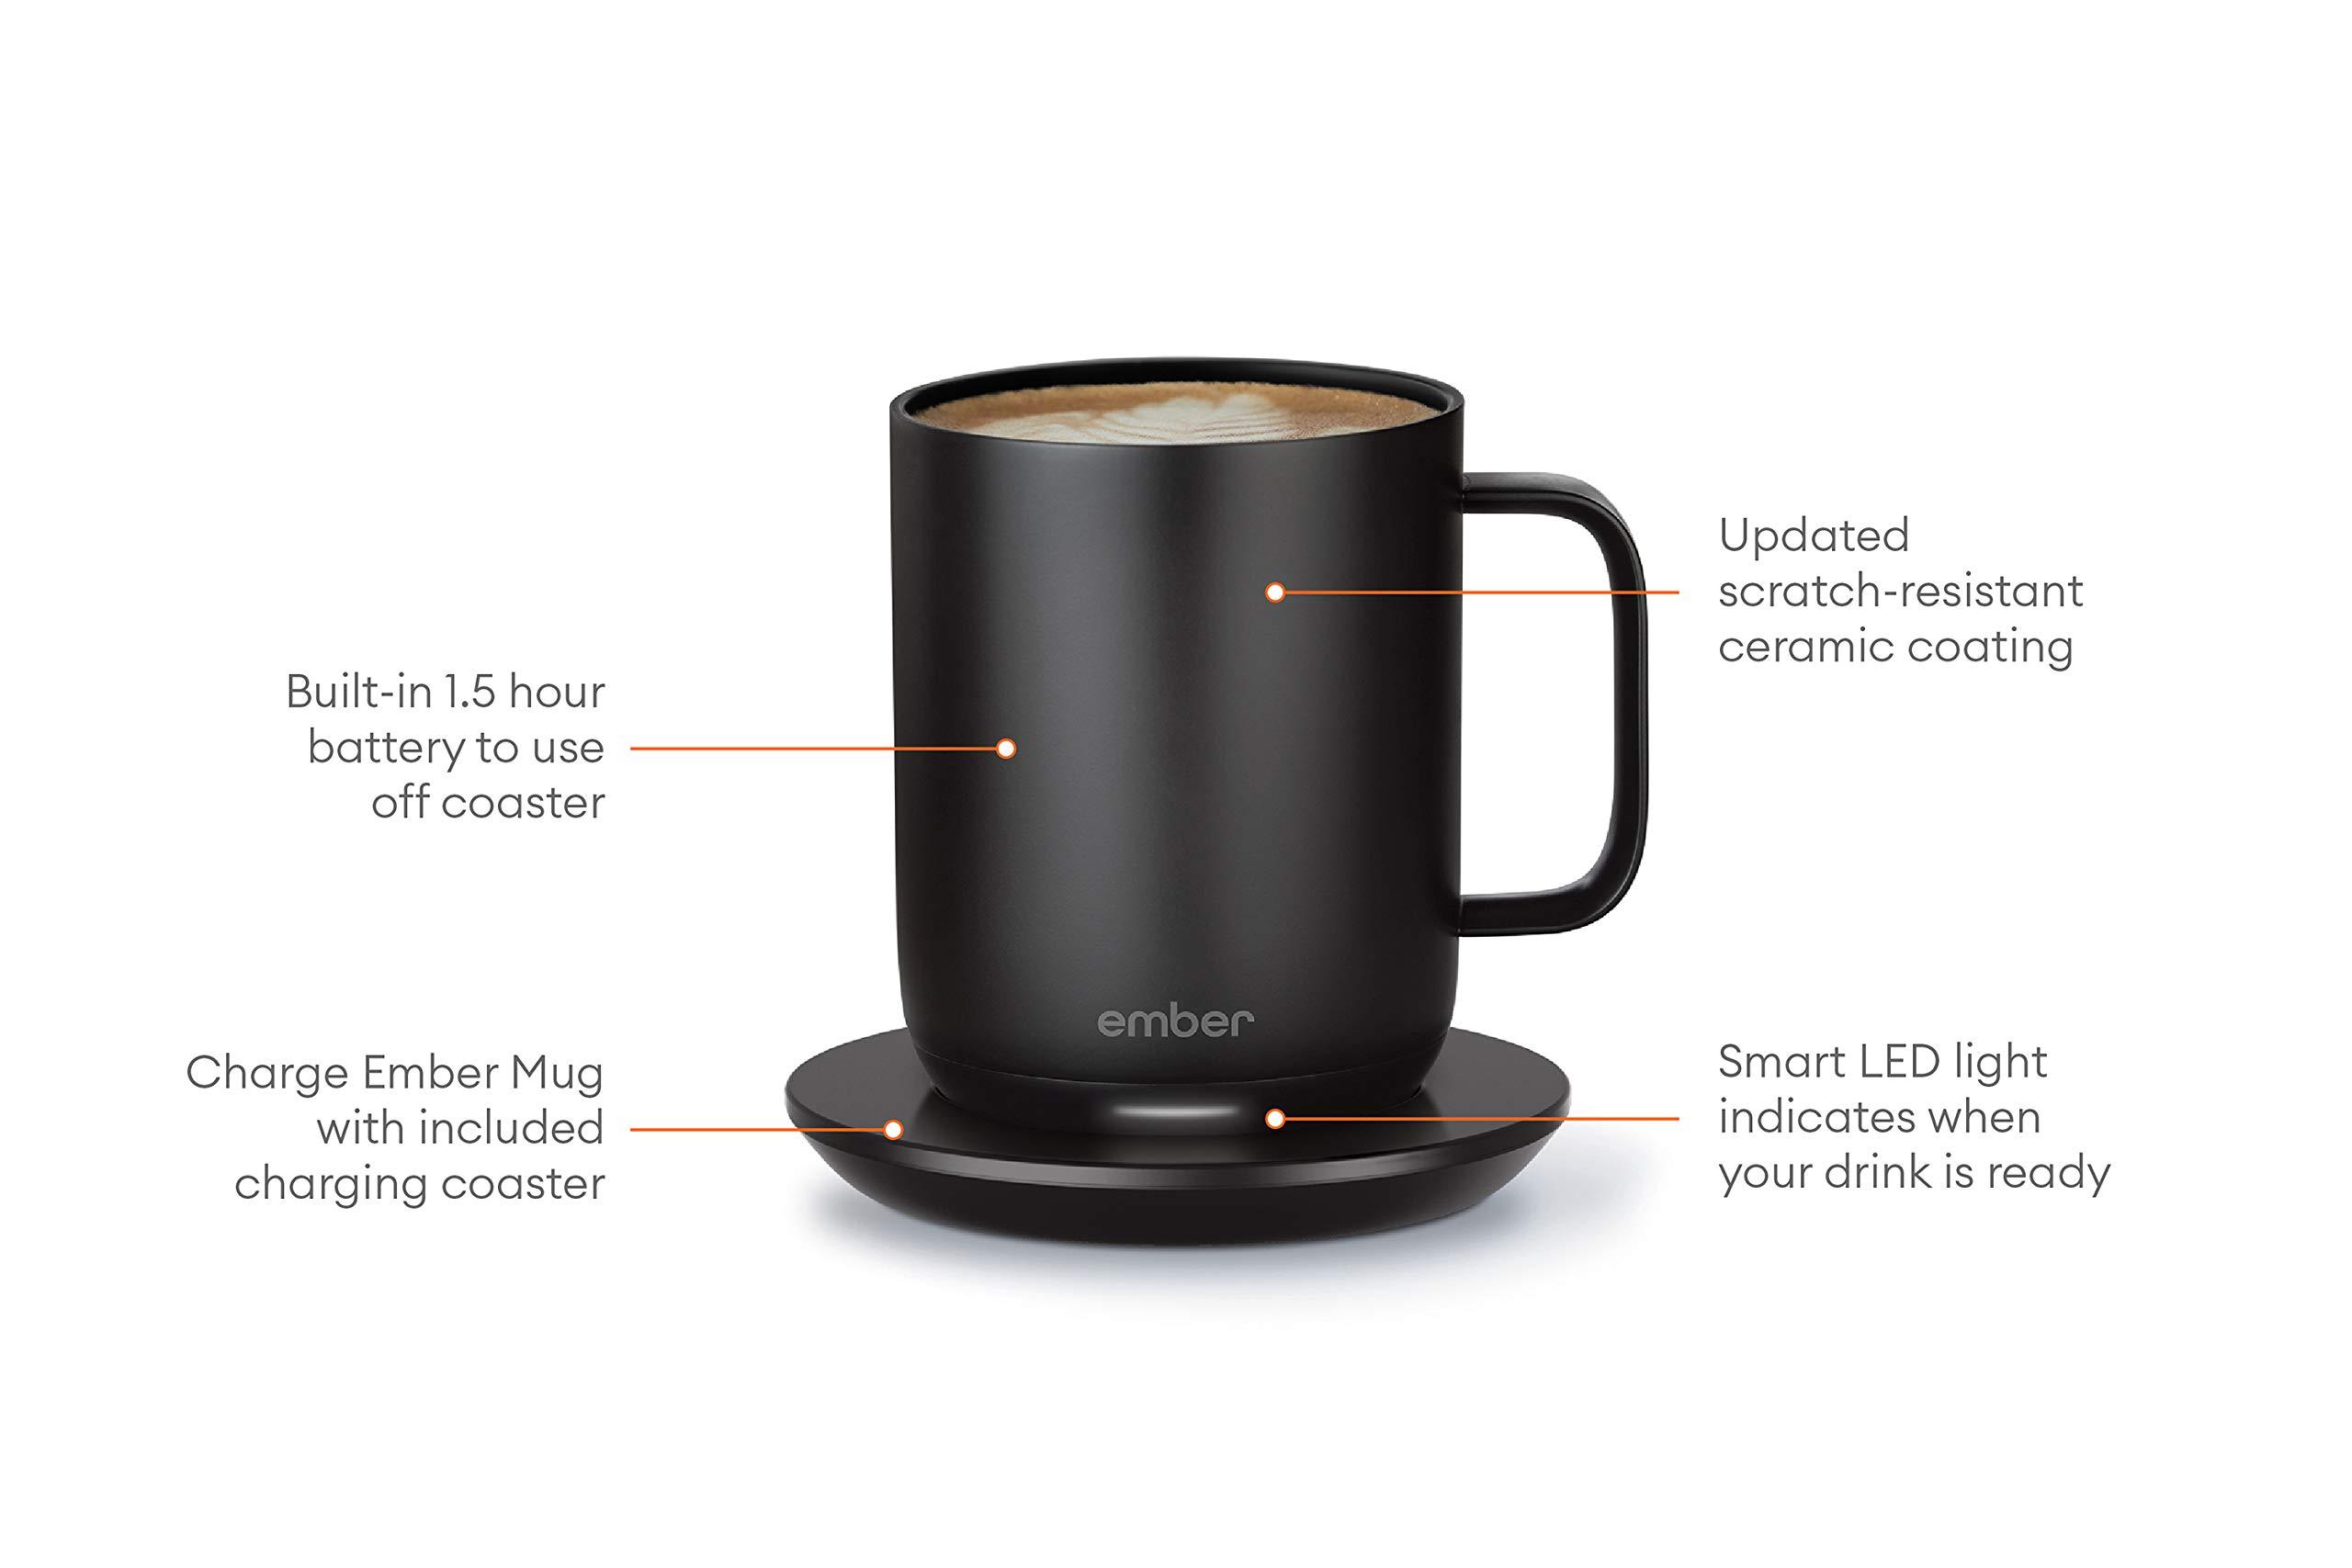 Ember Temperature Control Smart Mug 2, 10 oz, Black 1.5-hr Battery Life App Controlled Heated Coffee Mug - image 3 of 6